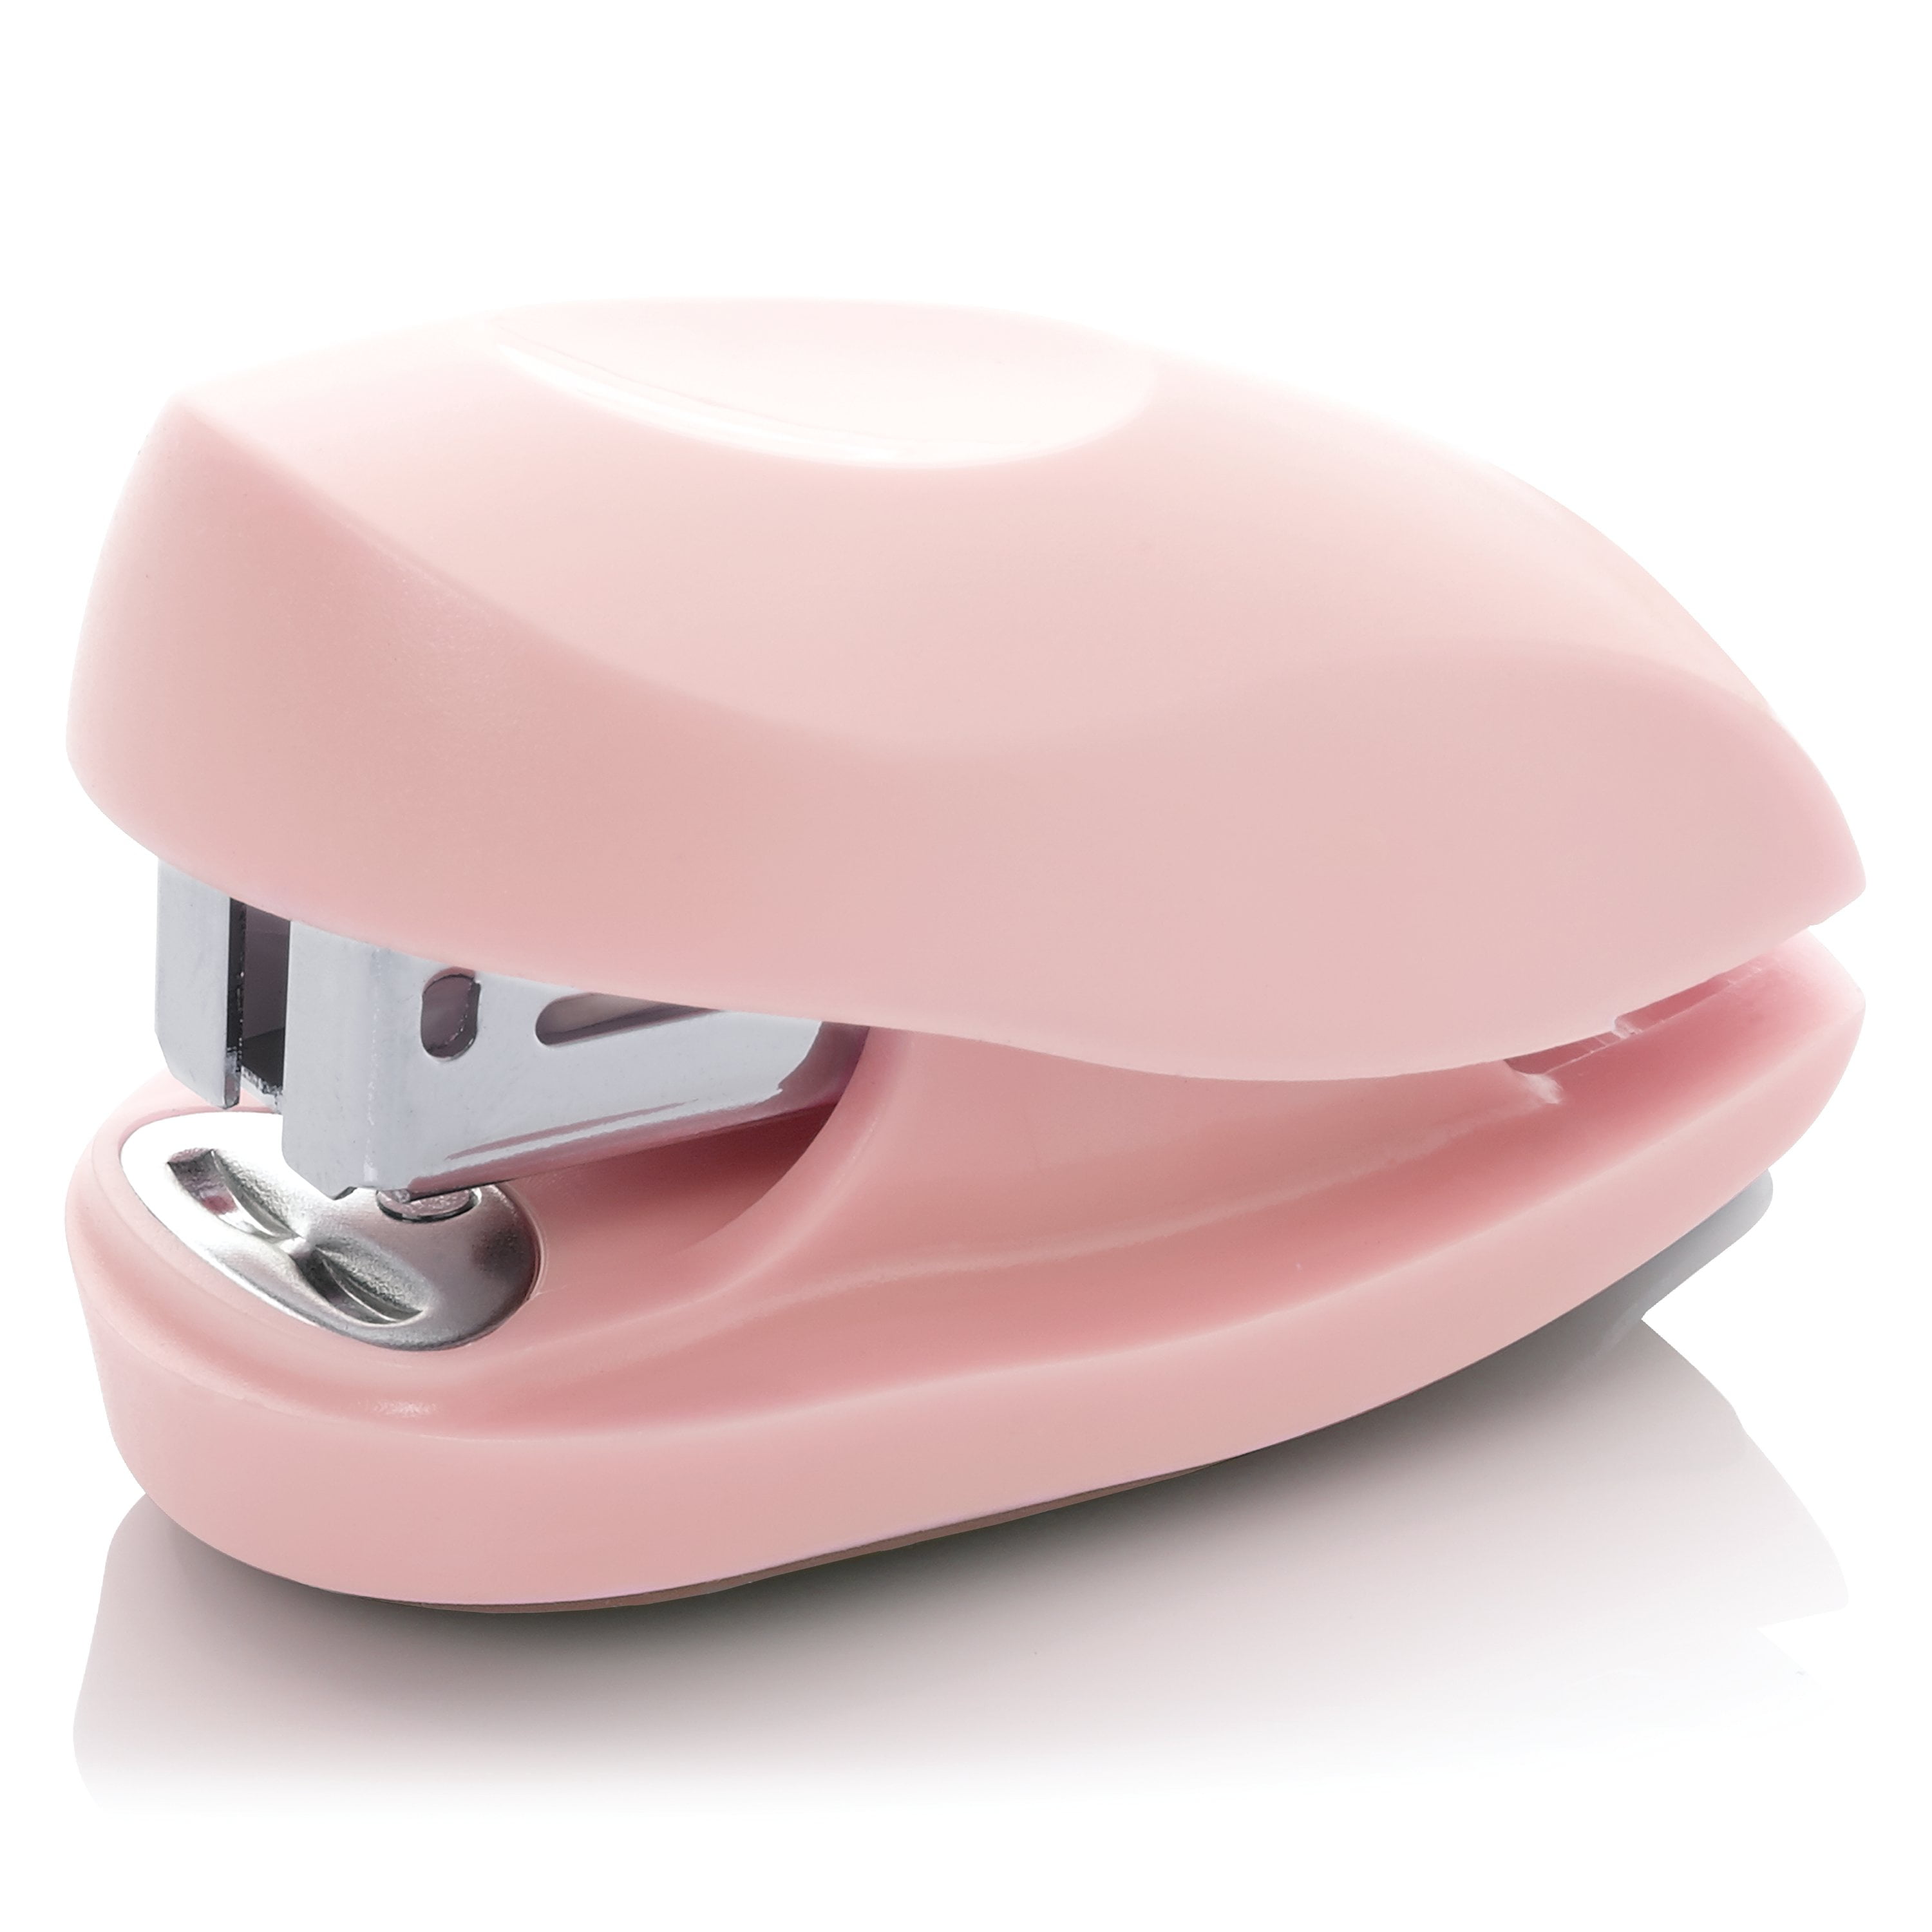 Swingline Smart Touch Low Force Stapler Pink #66519 for sale online